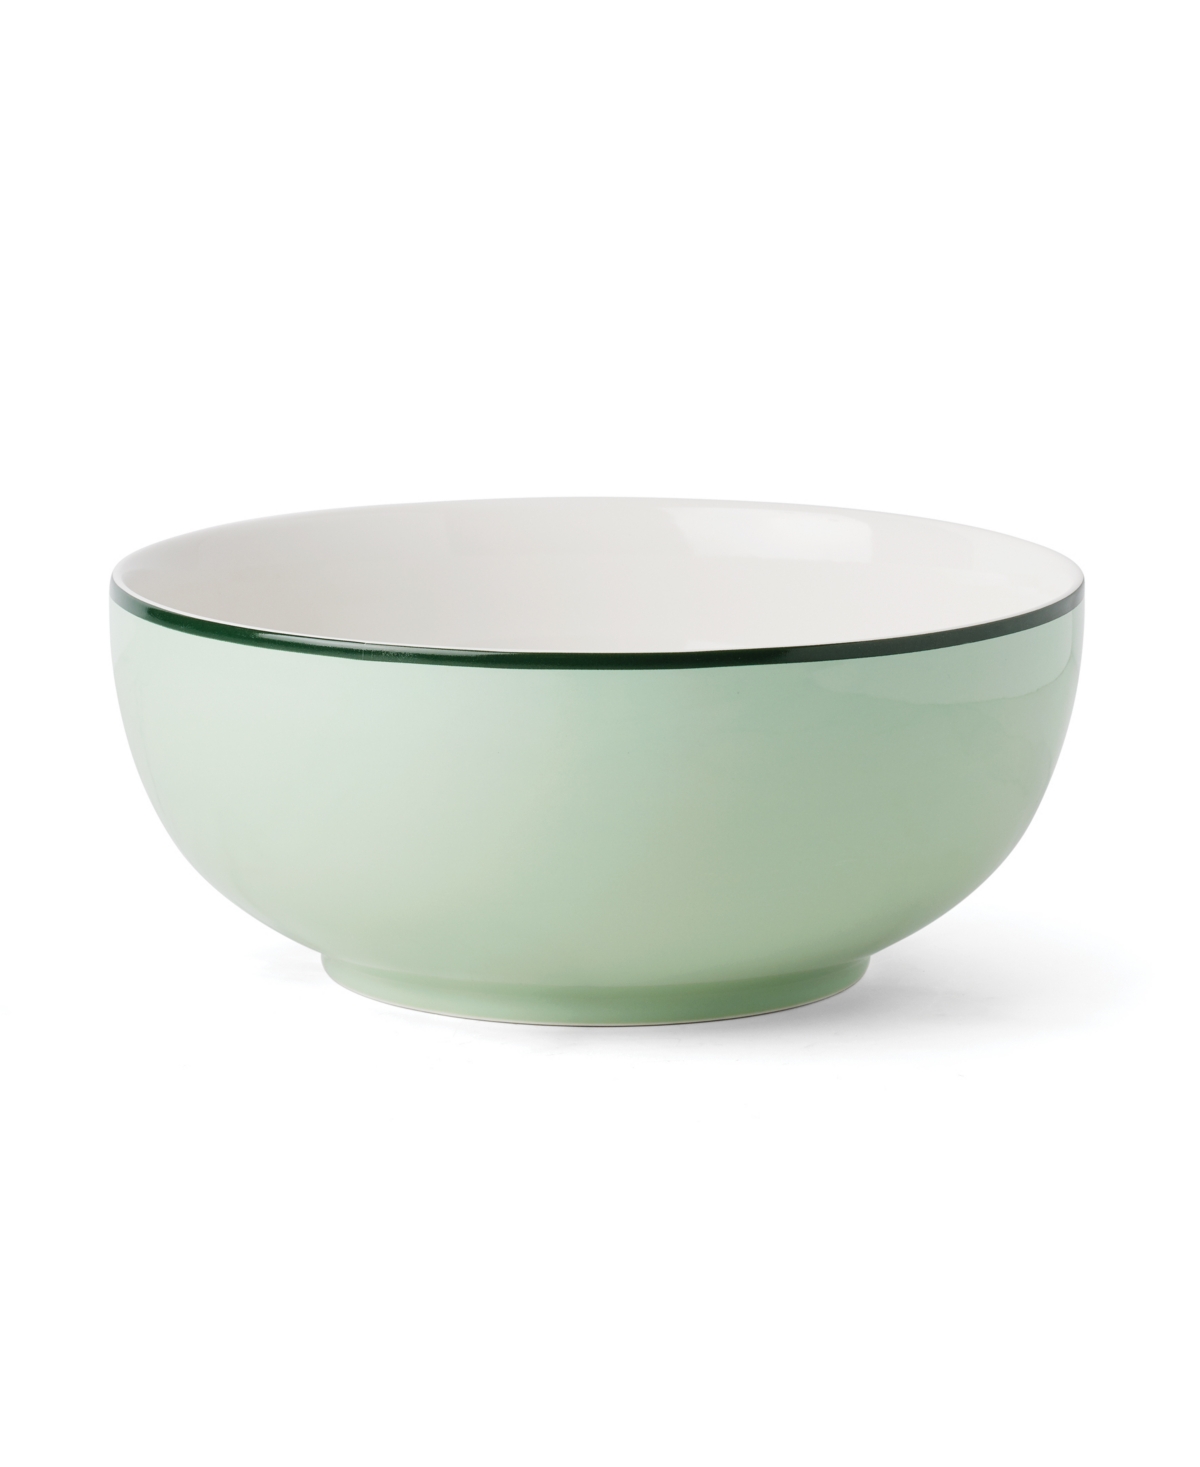 Kate Spade New York Make It Pop Serving Bowl In Light Green